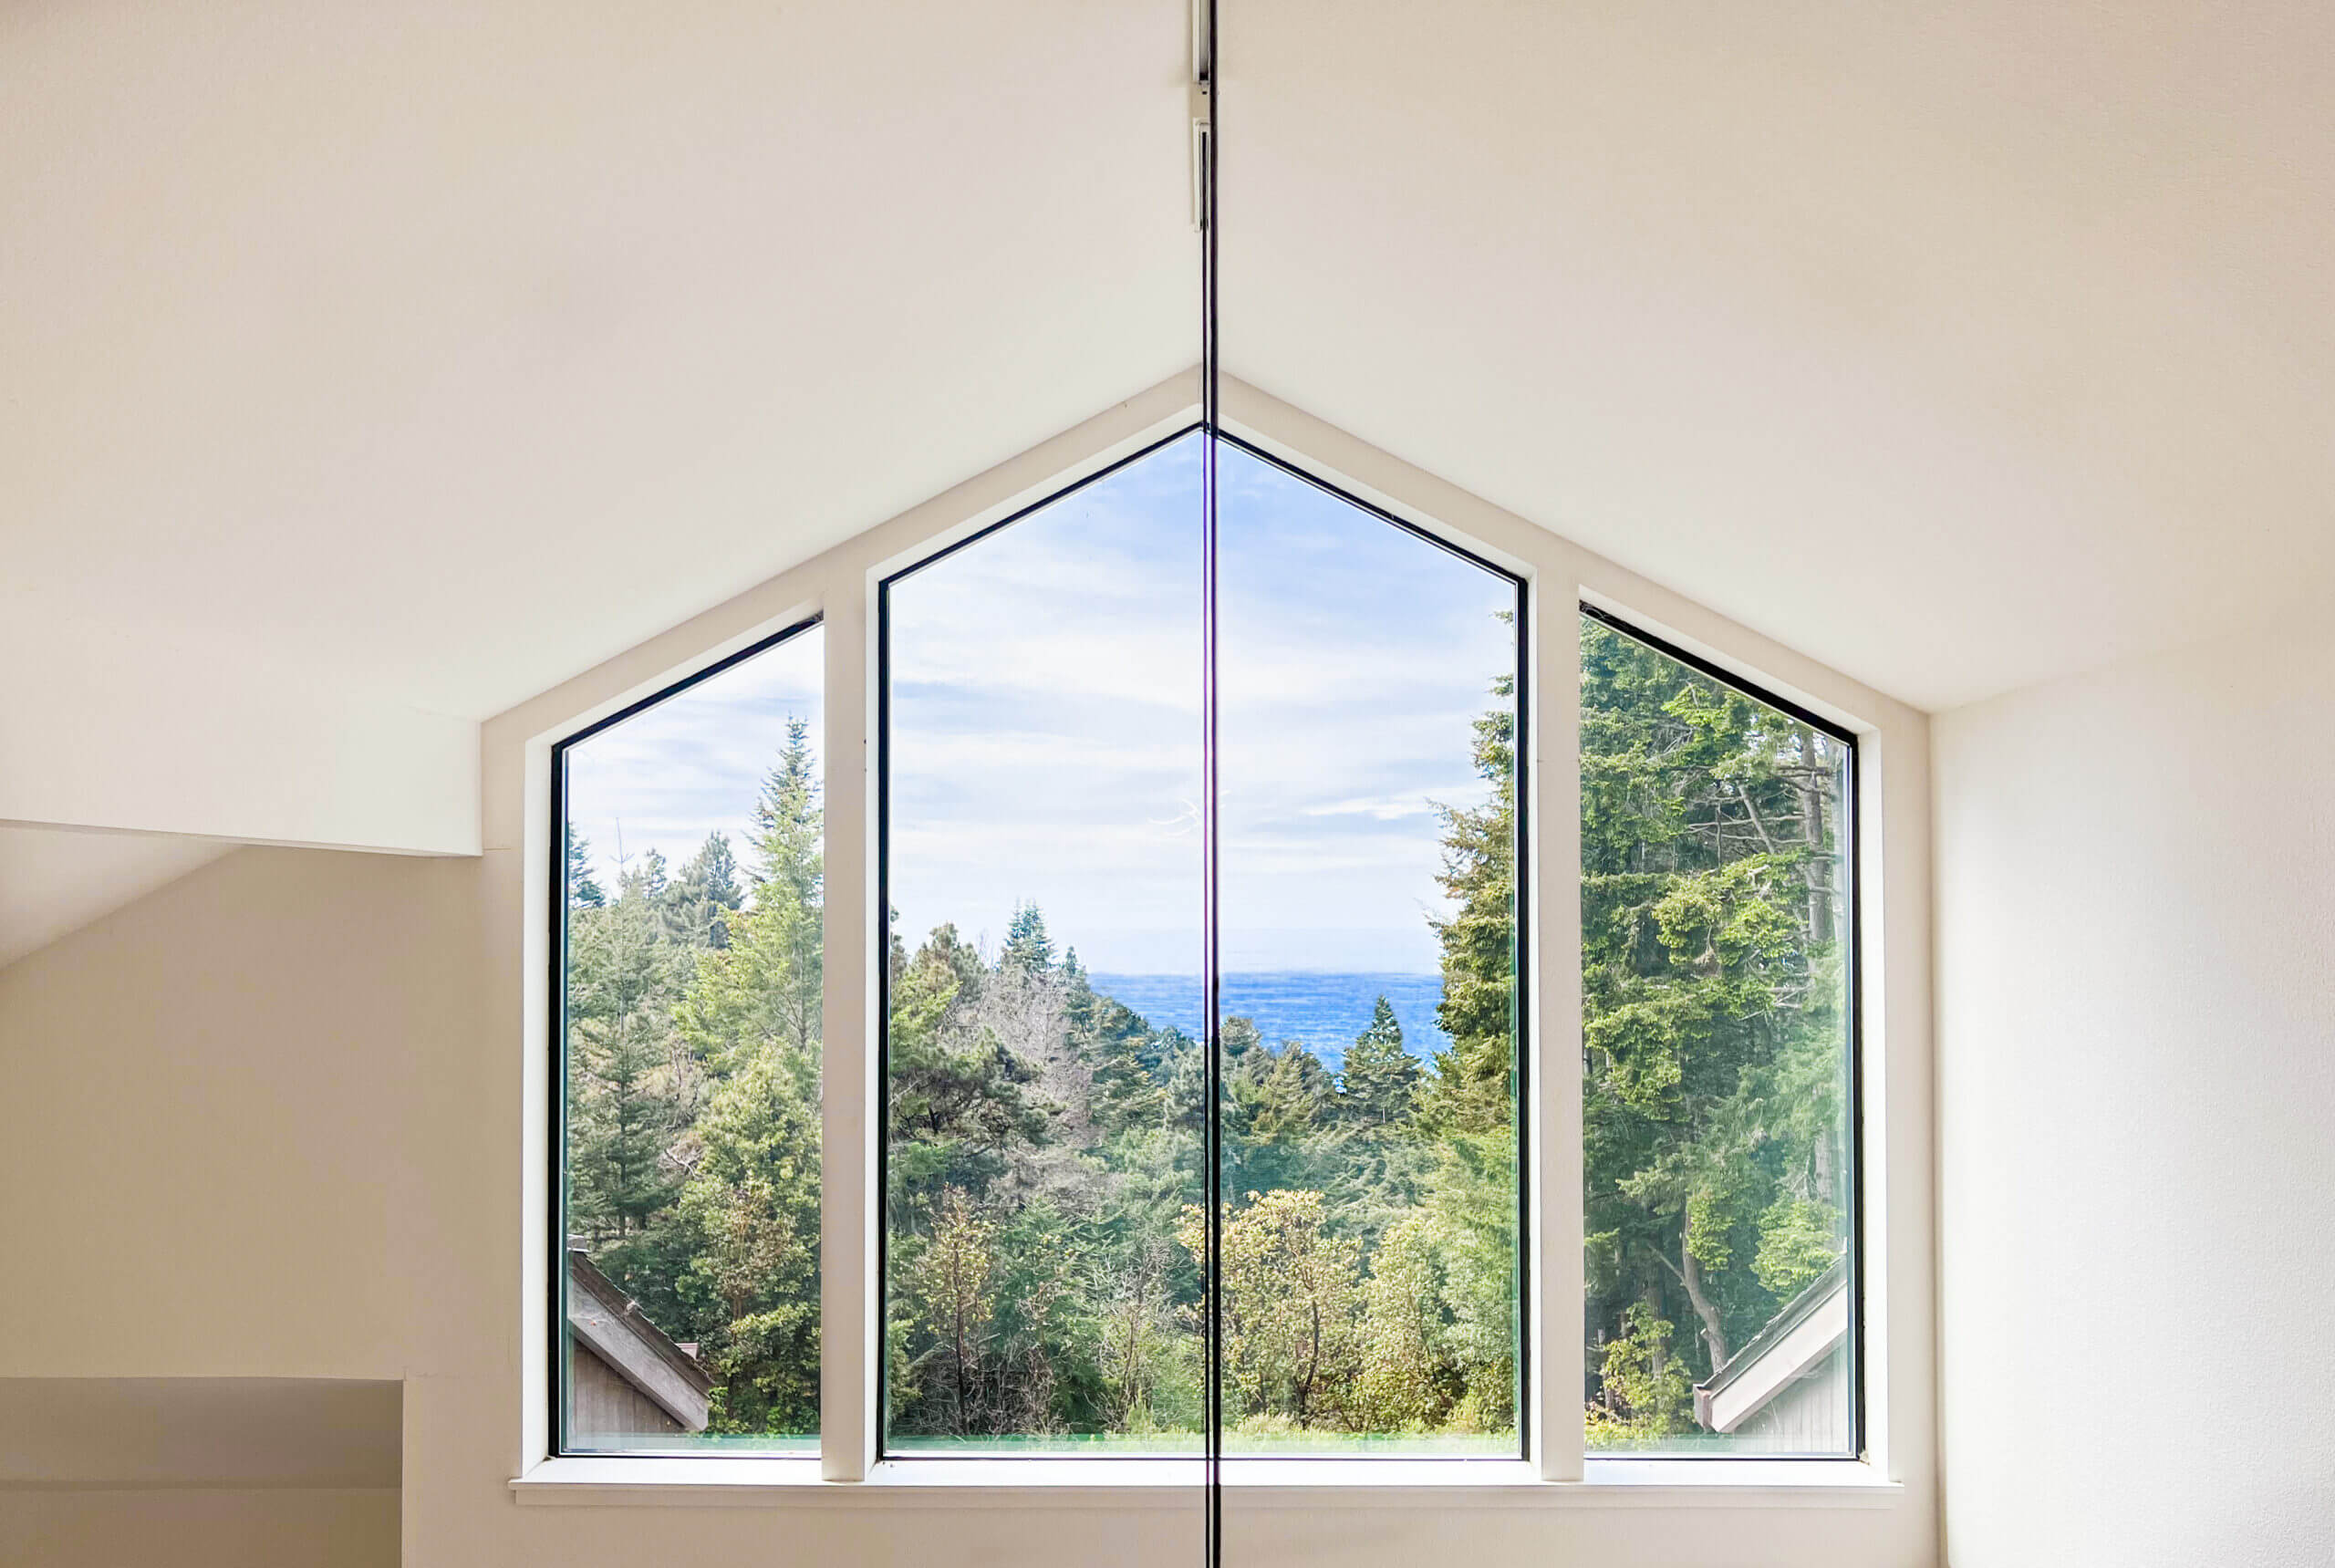 Sea Ridge window view to outdoor pines and ocean